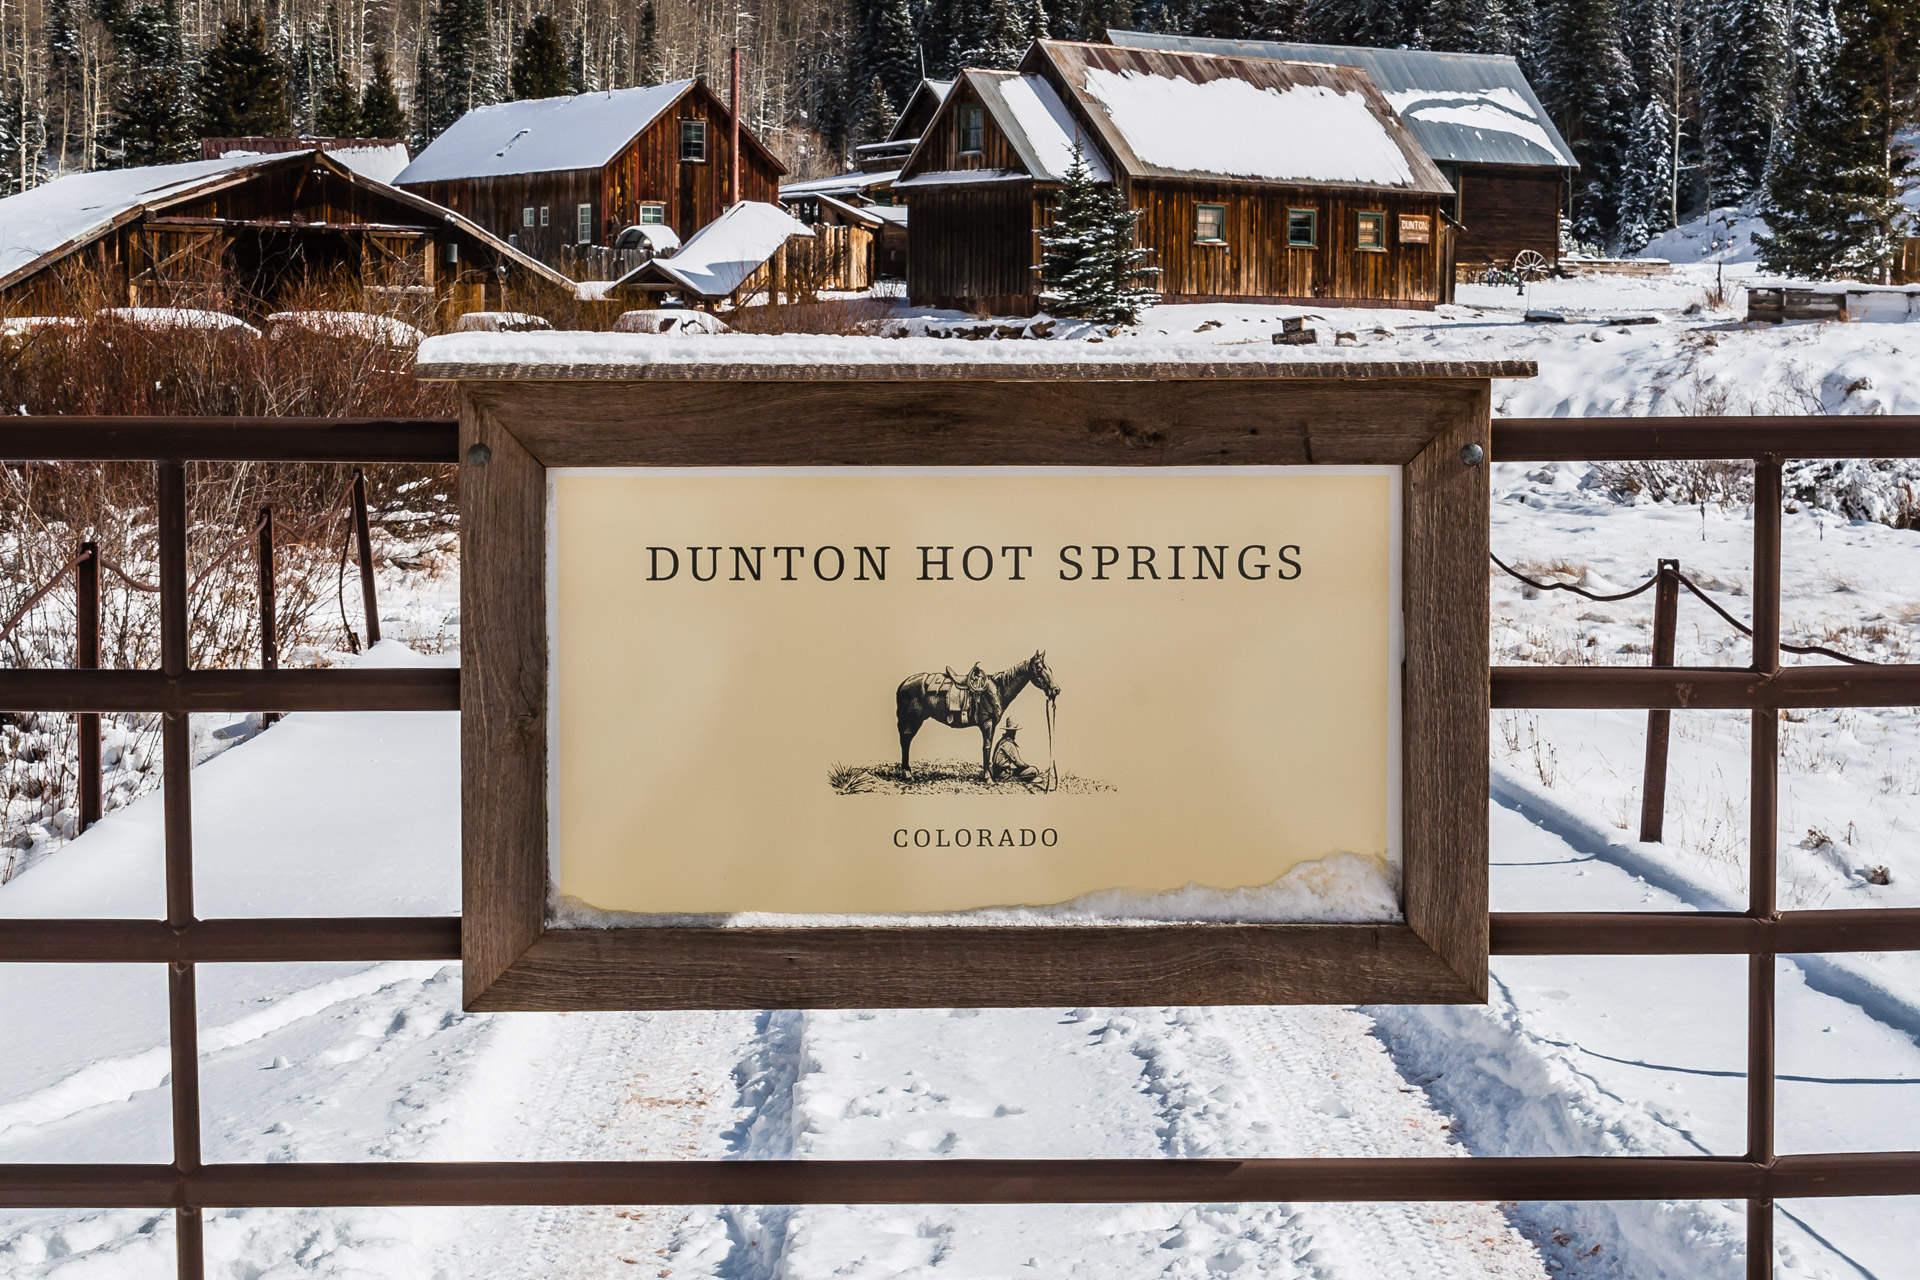 Dunton Hot Springs (sign)